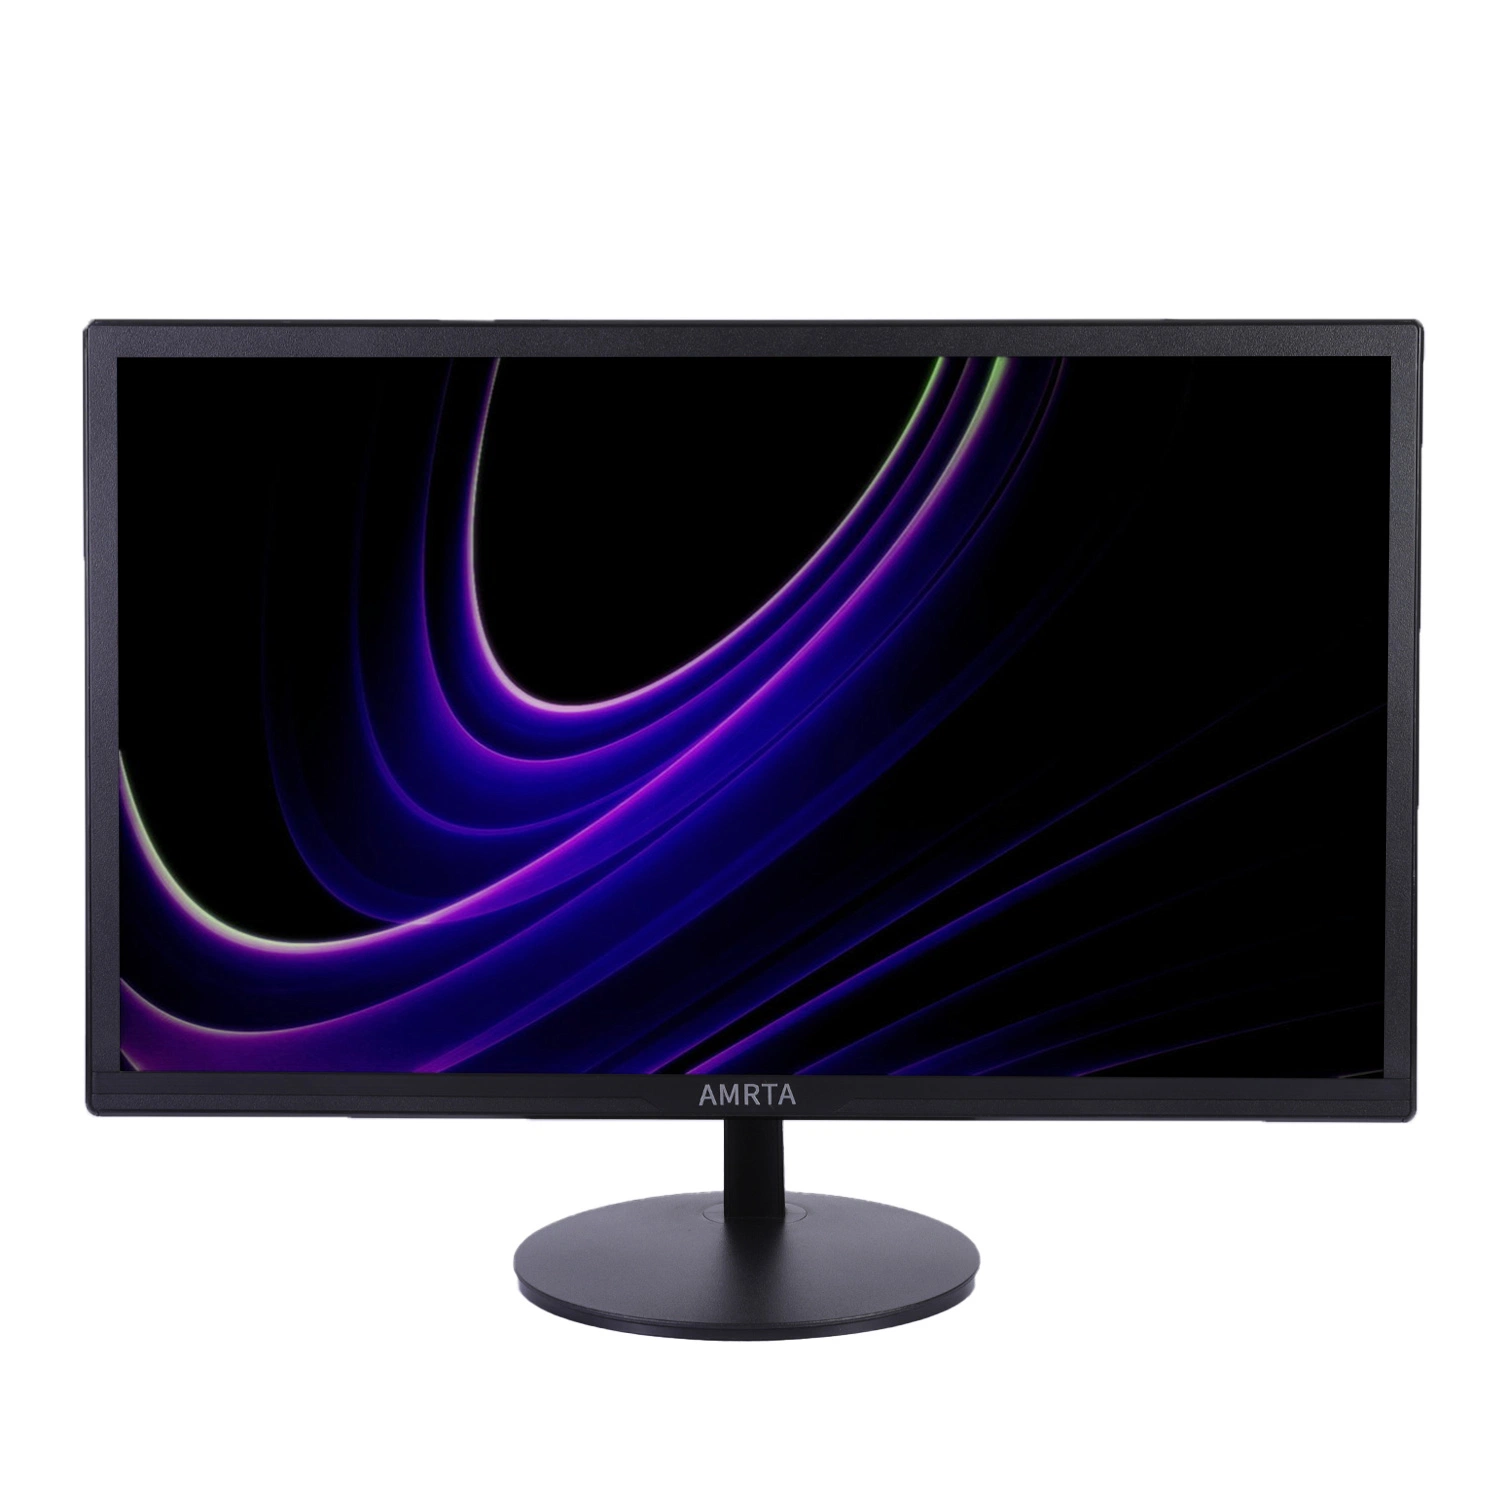 Best Price 19 19.5 20 Inch Desktop Computer Monitor LED Display